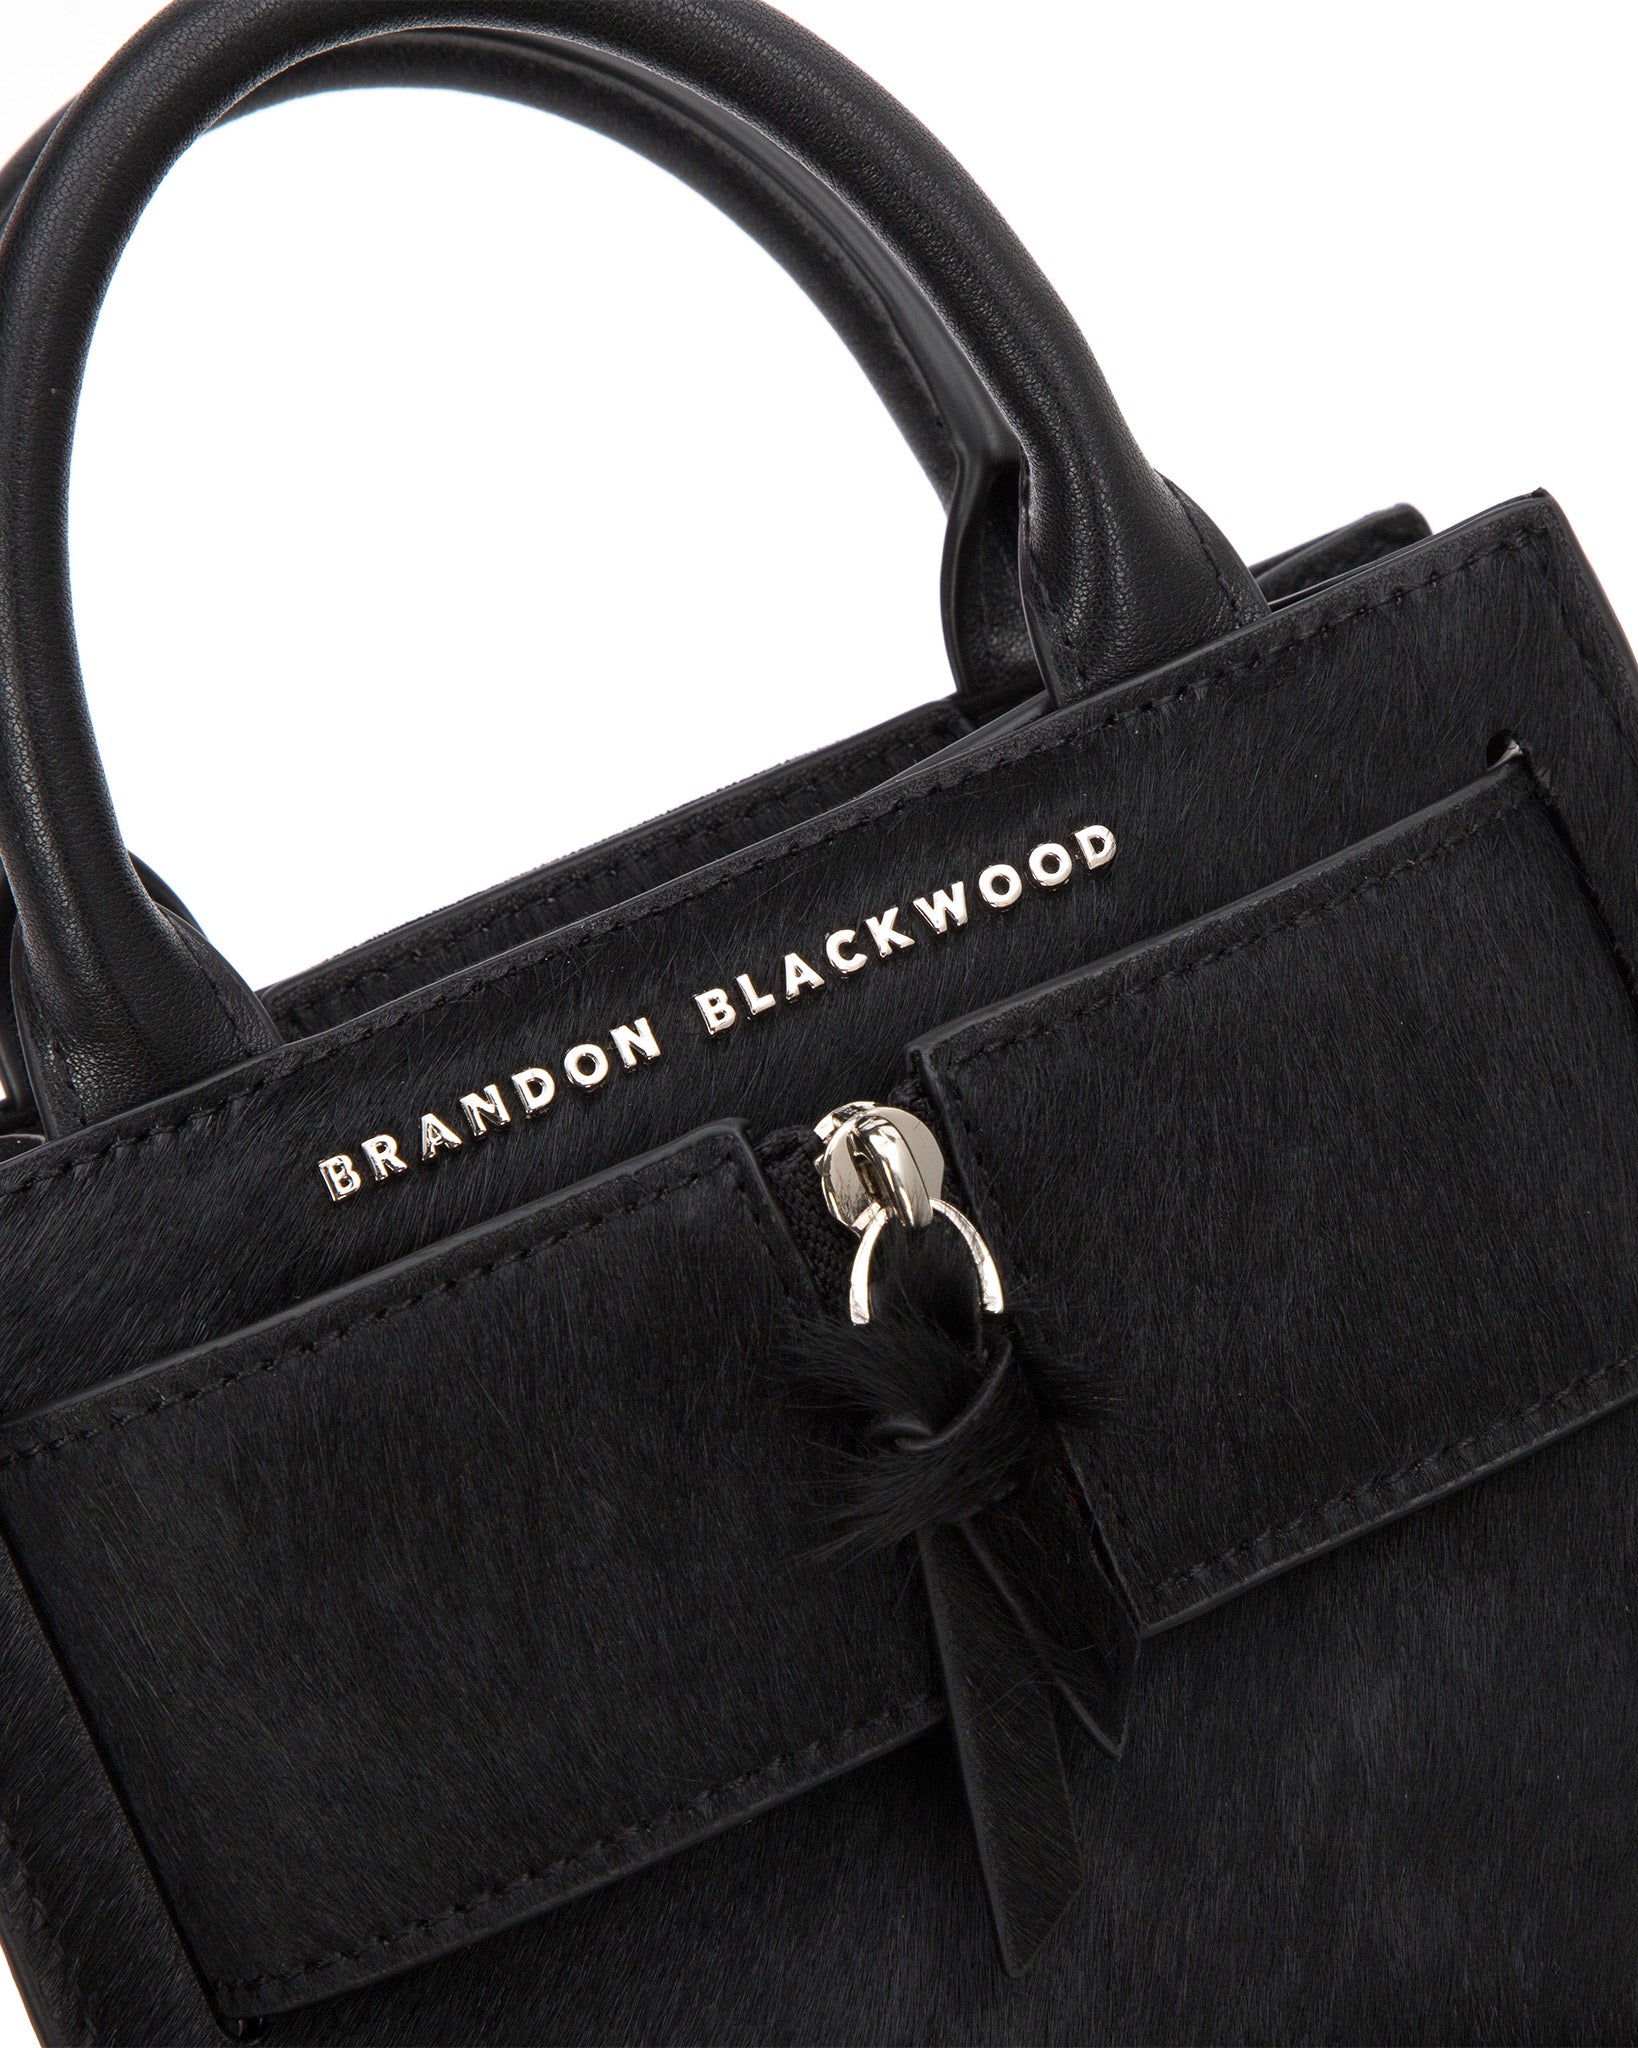 Brandon Blackwood Women's Kimora Bag